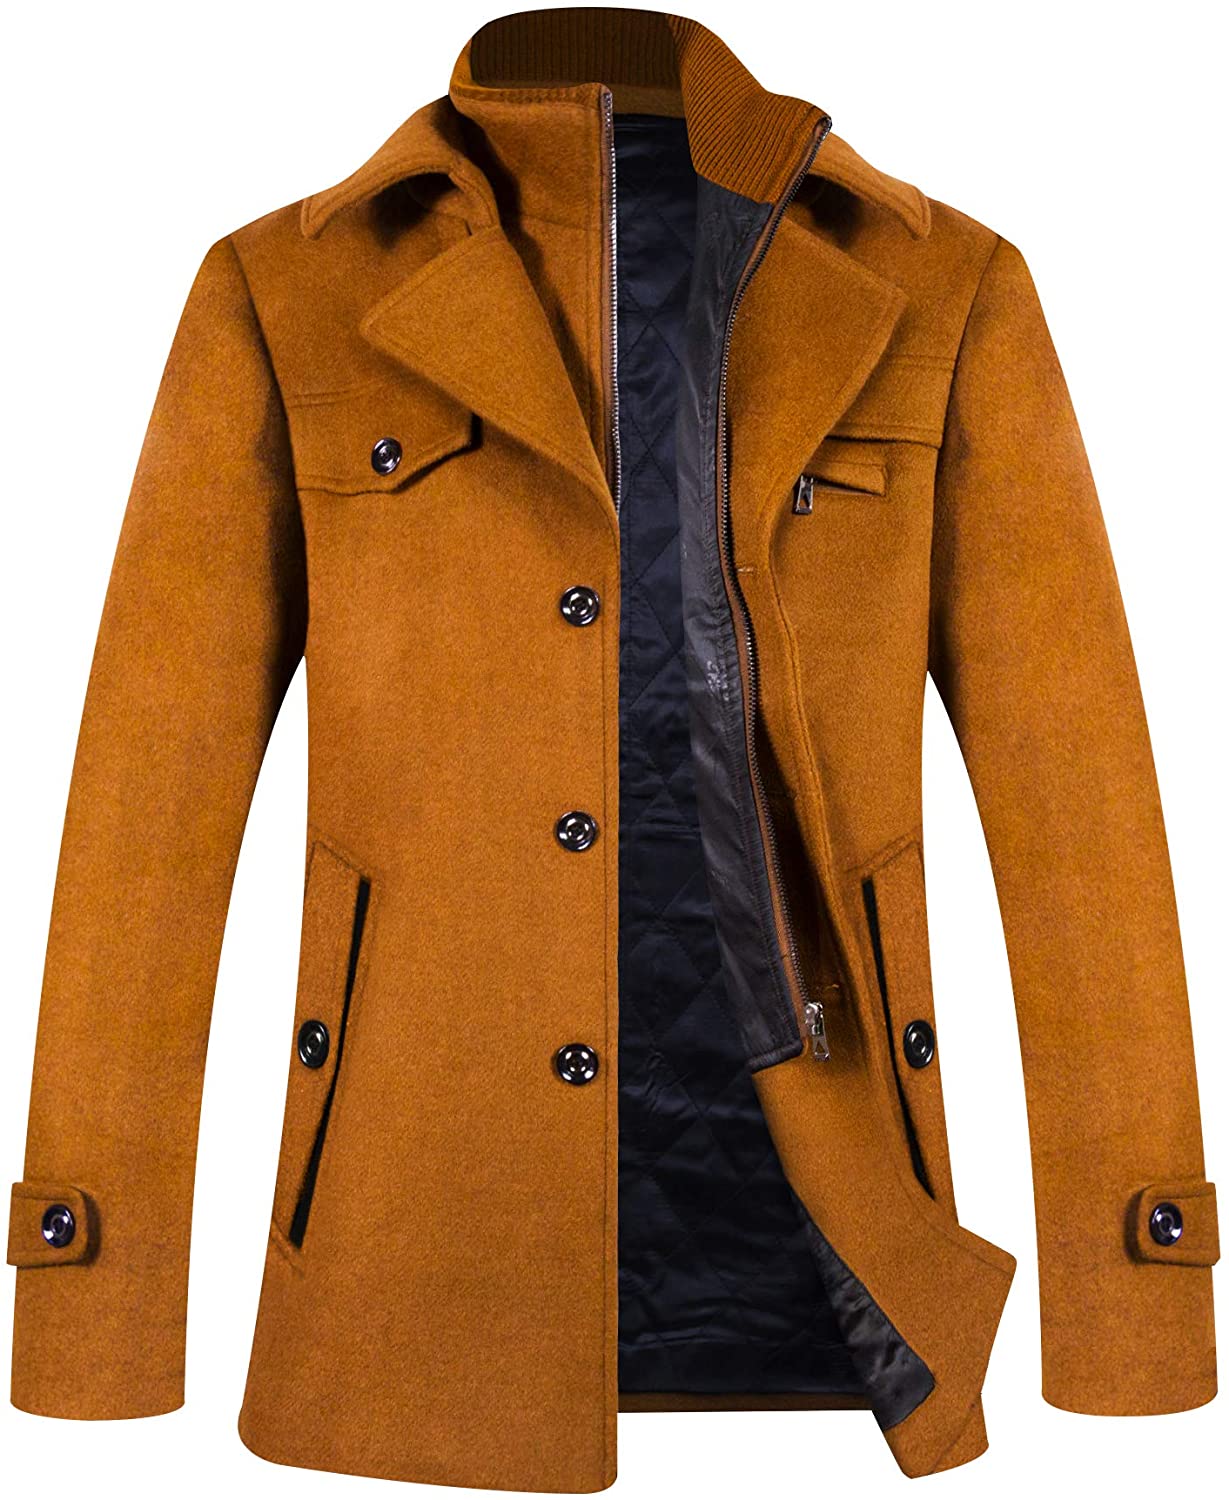 ELETOP Men's Coat 80% Wool Blend Trench Coat Winter French Business Overcoat Single Breasted Long Top Coat 